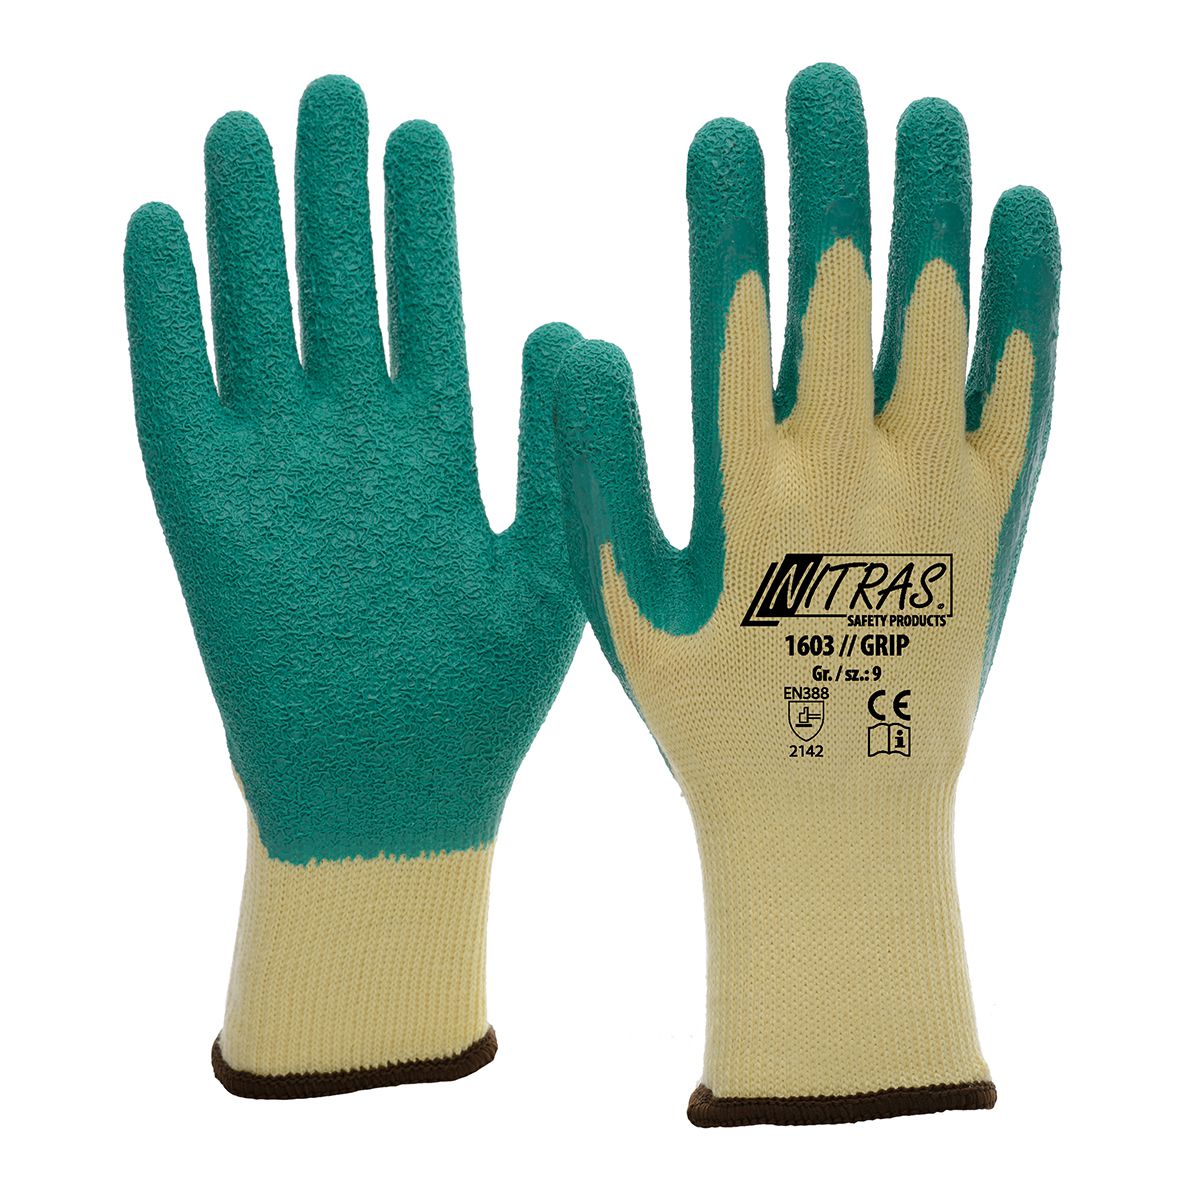 Nitras latex work glove 1603 Grip, EN 388 / EN 420, partly coated, 12 pieces, size 08/M